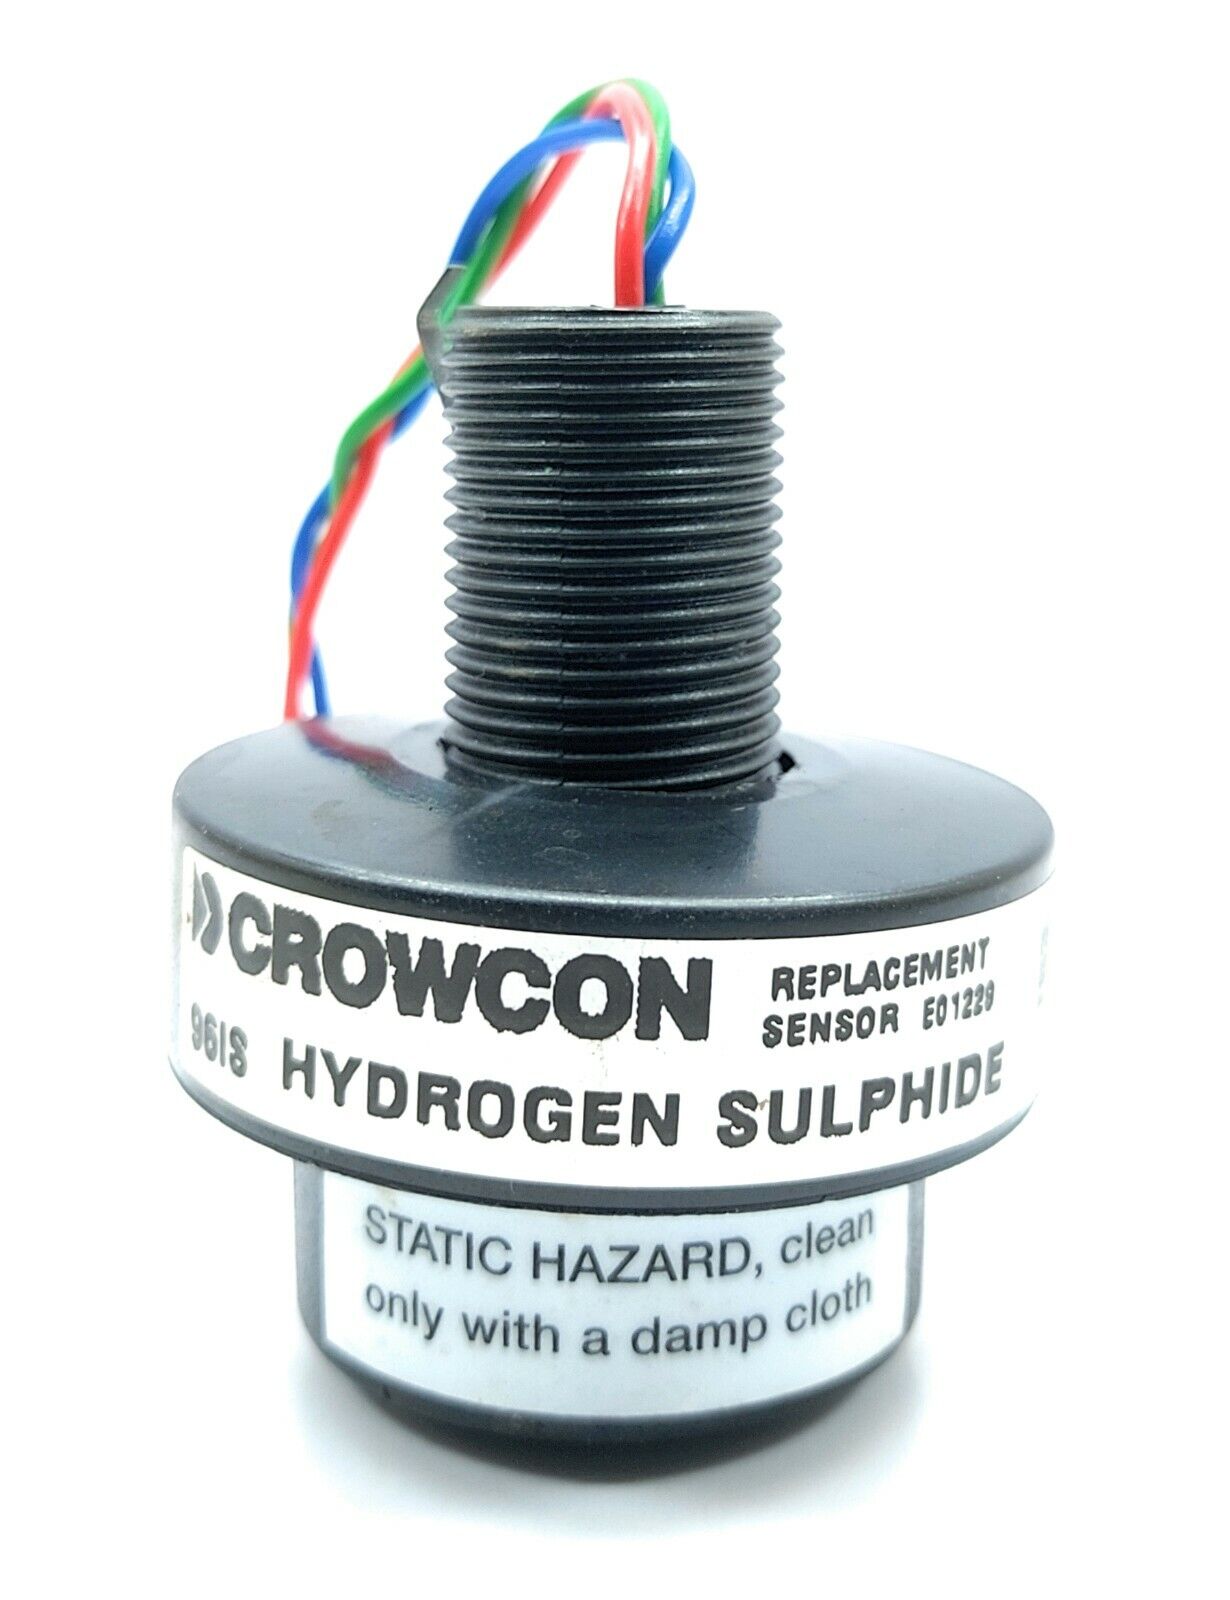 Crowcon E0 1229 Replacement Sensor 961S Hydrogen Sulphide